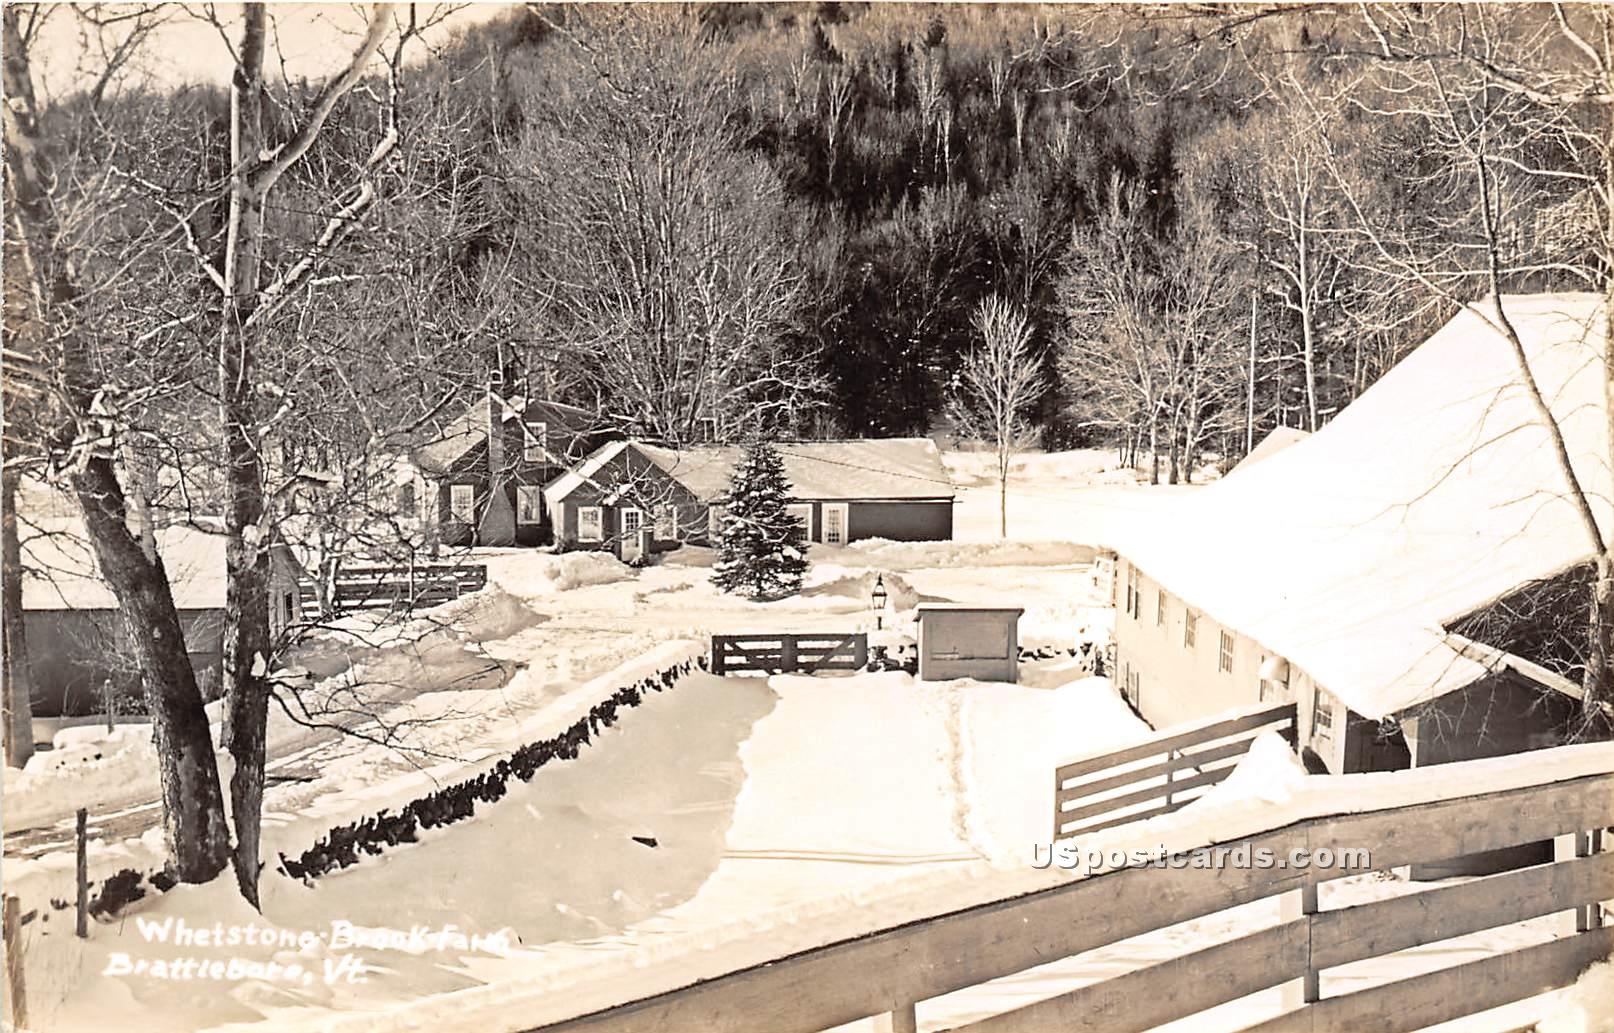 Whetstone Brook Farm - Brattleboro, Vermont VT Postcard